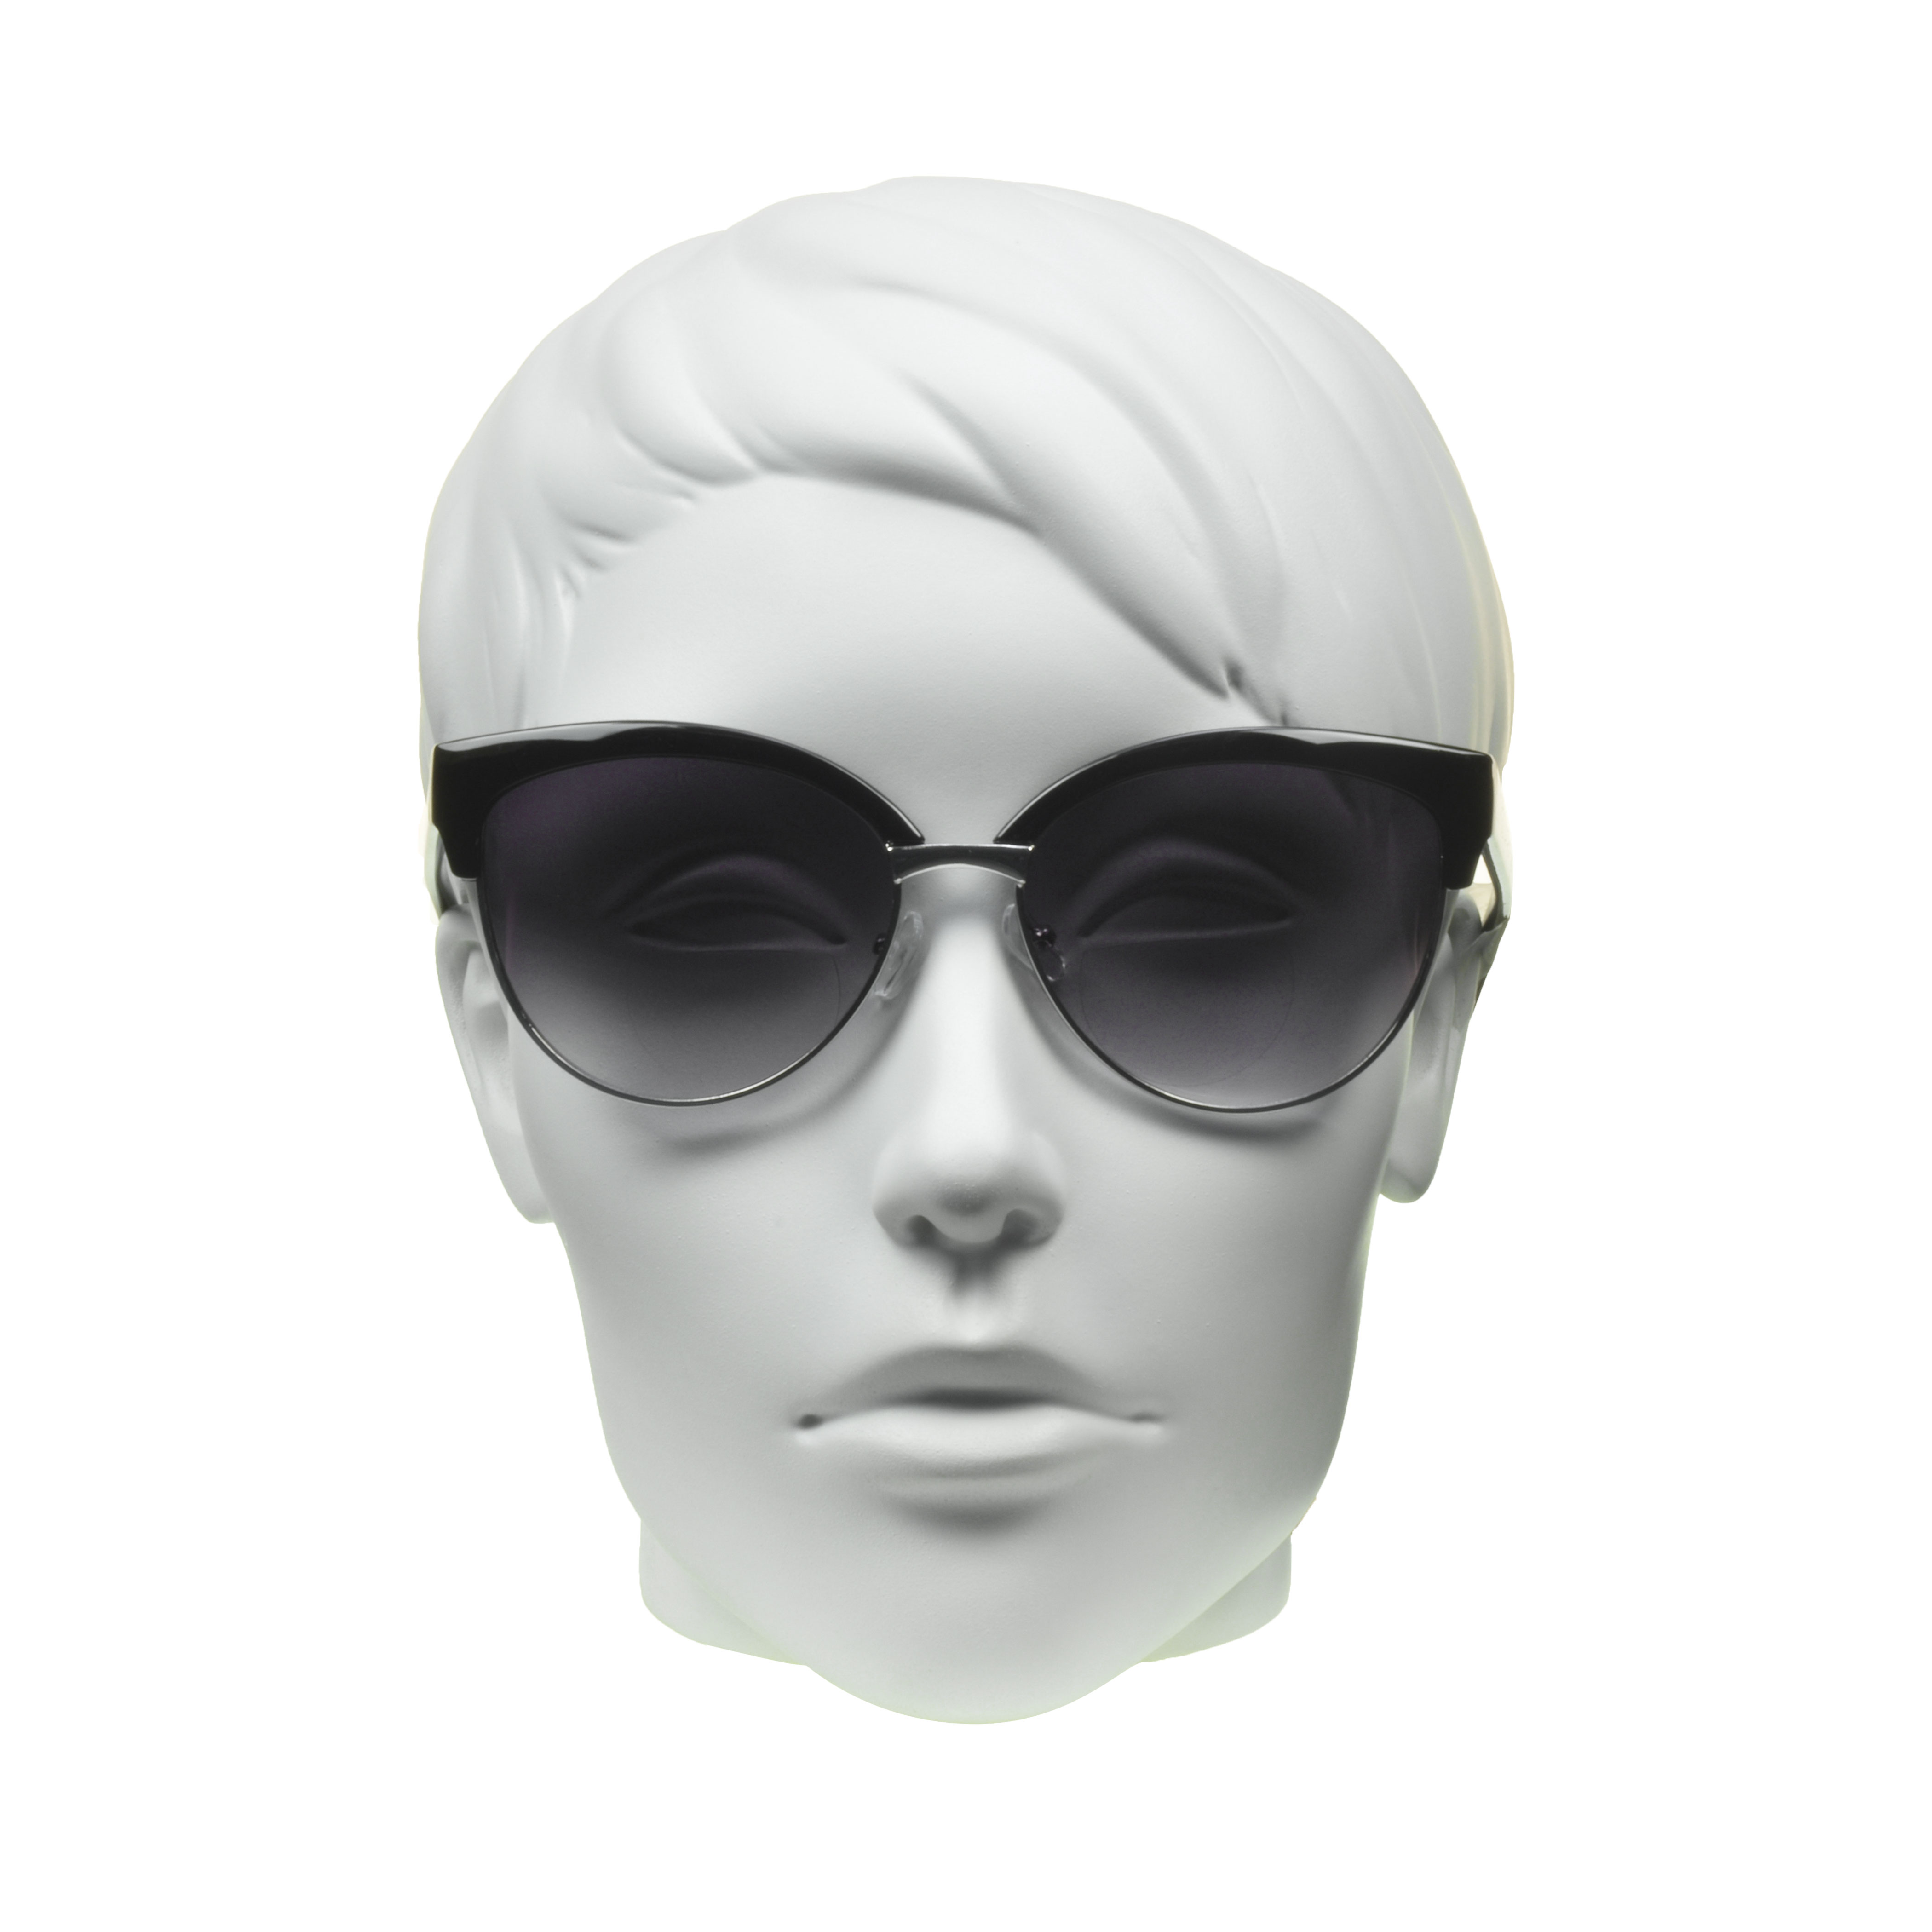 proSPORT Women Bifocal Reading Cateye Fashion Horn Rim Sunglasses Black Silver Frame Smoke Lens +1.25 - image 3 of 5